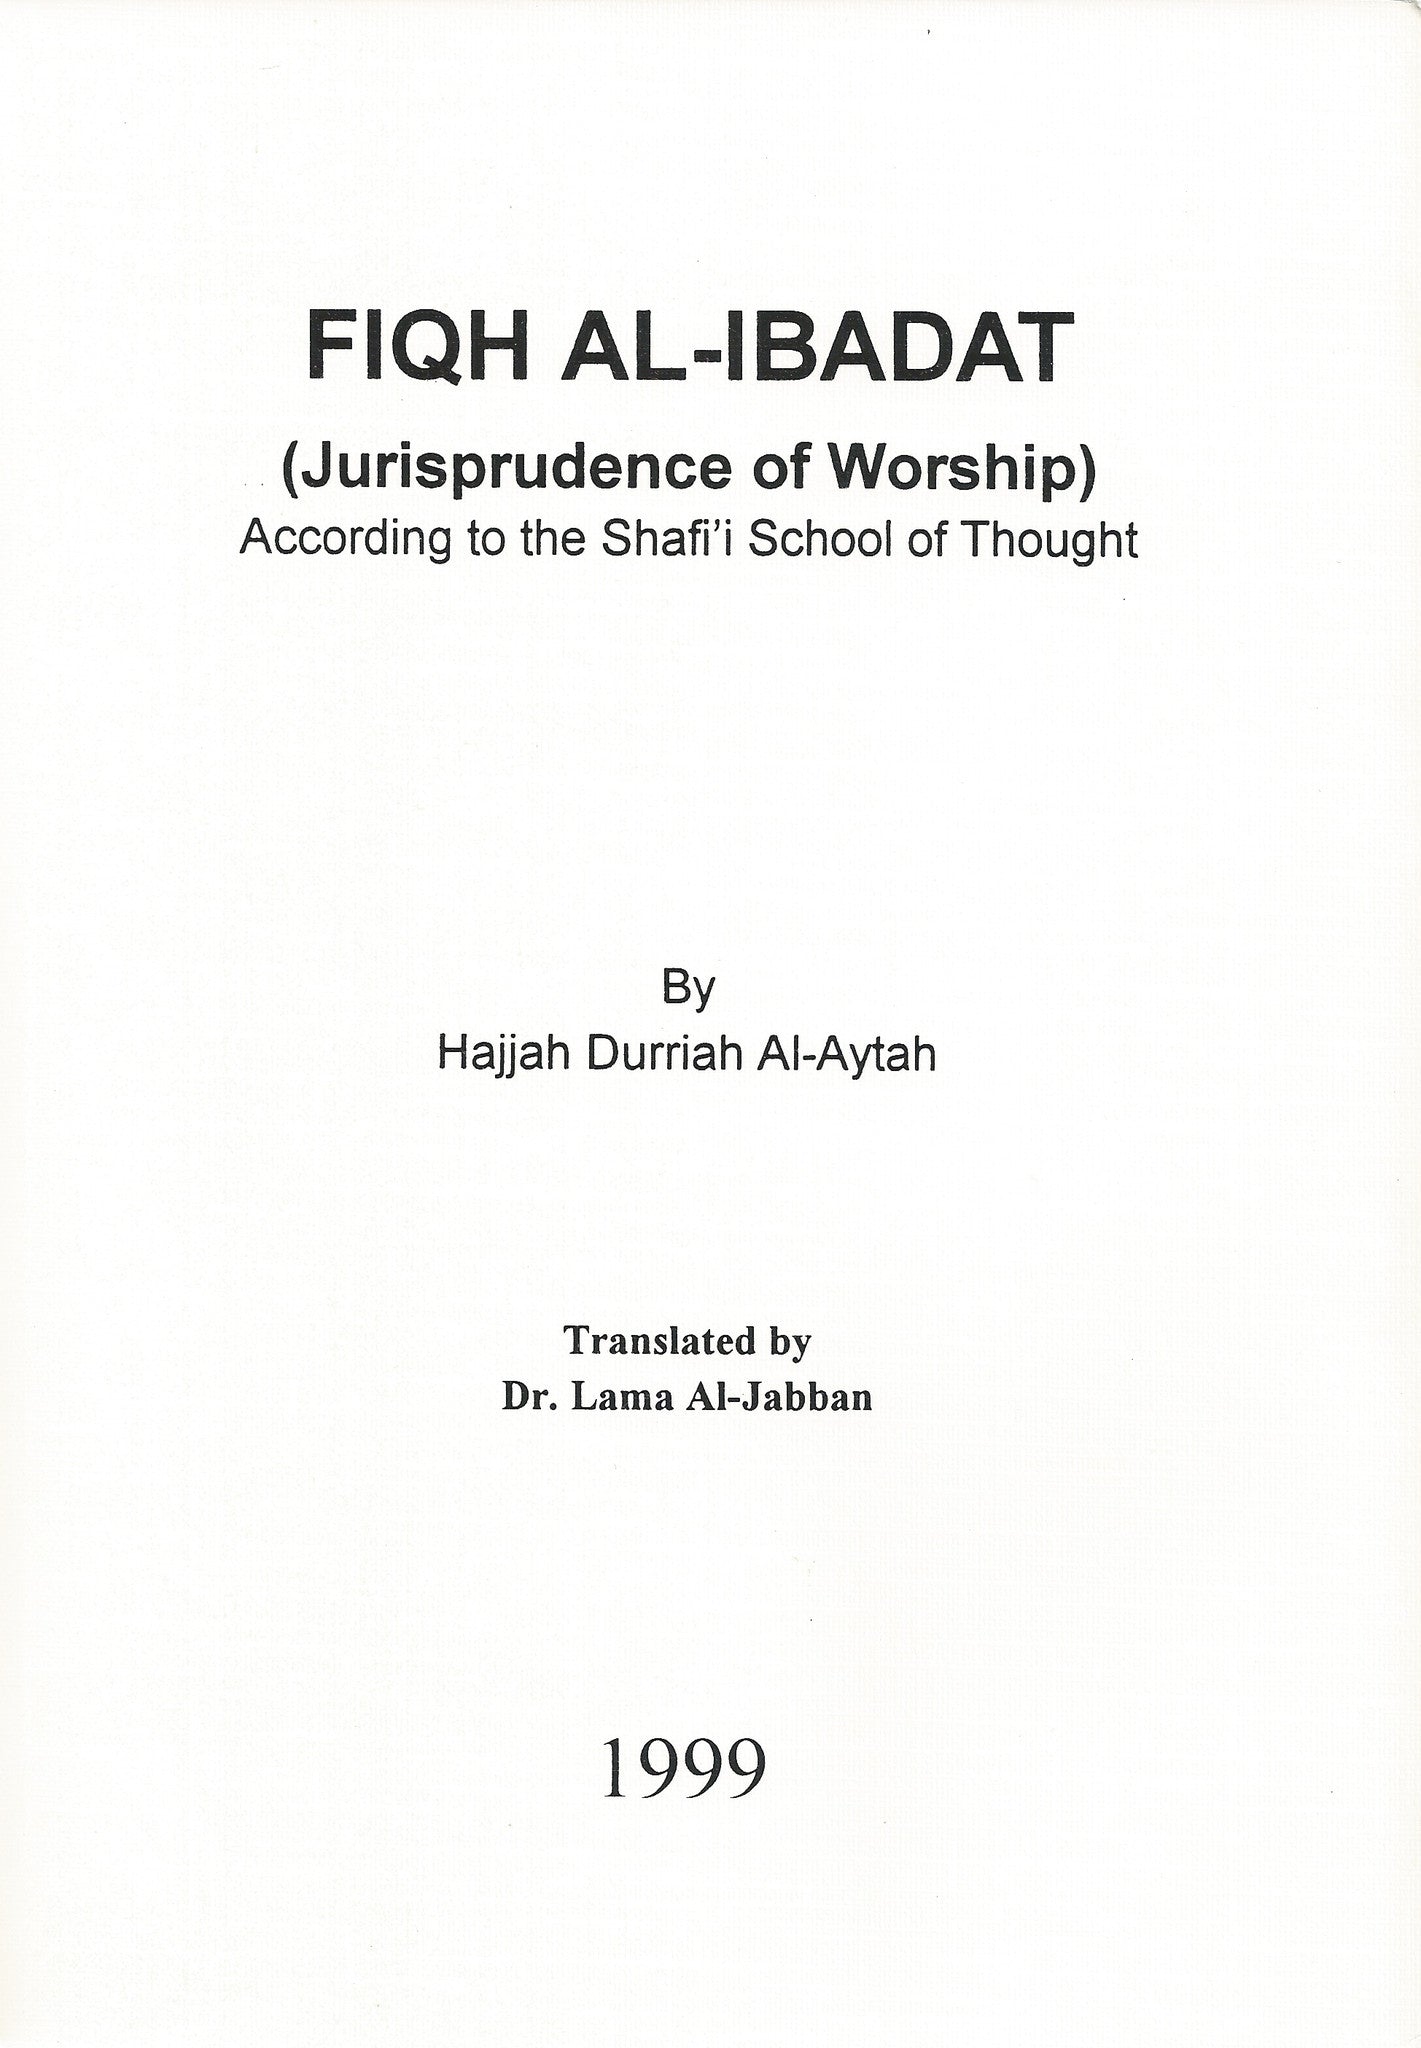 Fiqh al-Ibadat (English) - Jurisprudence of Worship According to the Shafi'i School of Thought , Book - Daybreak International Bookstore, Daybreak Press Global Bookshop
